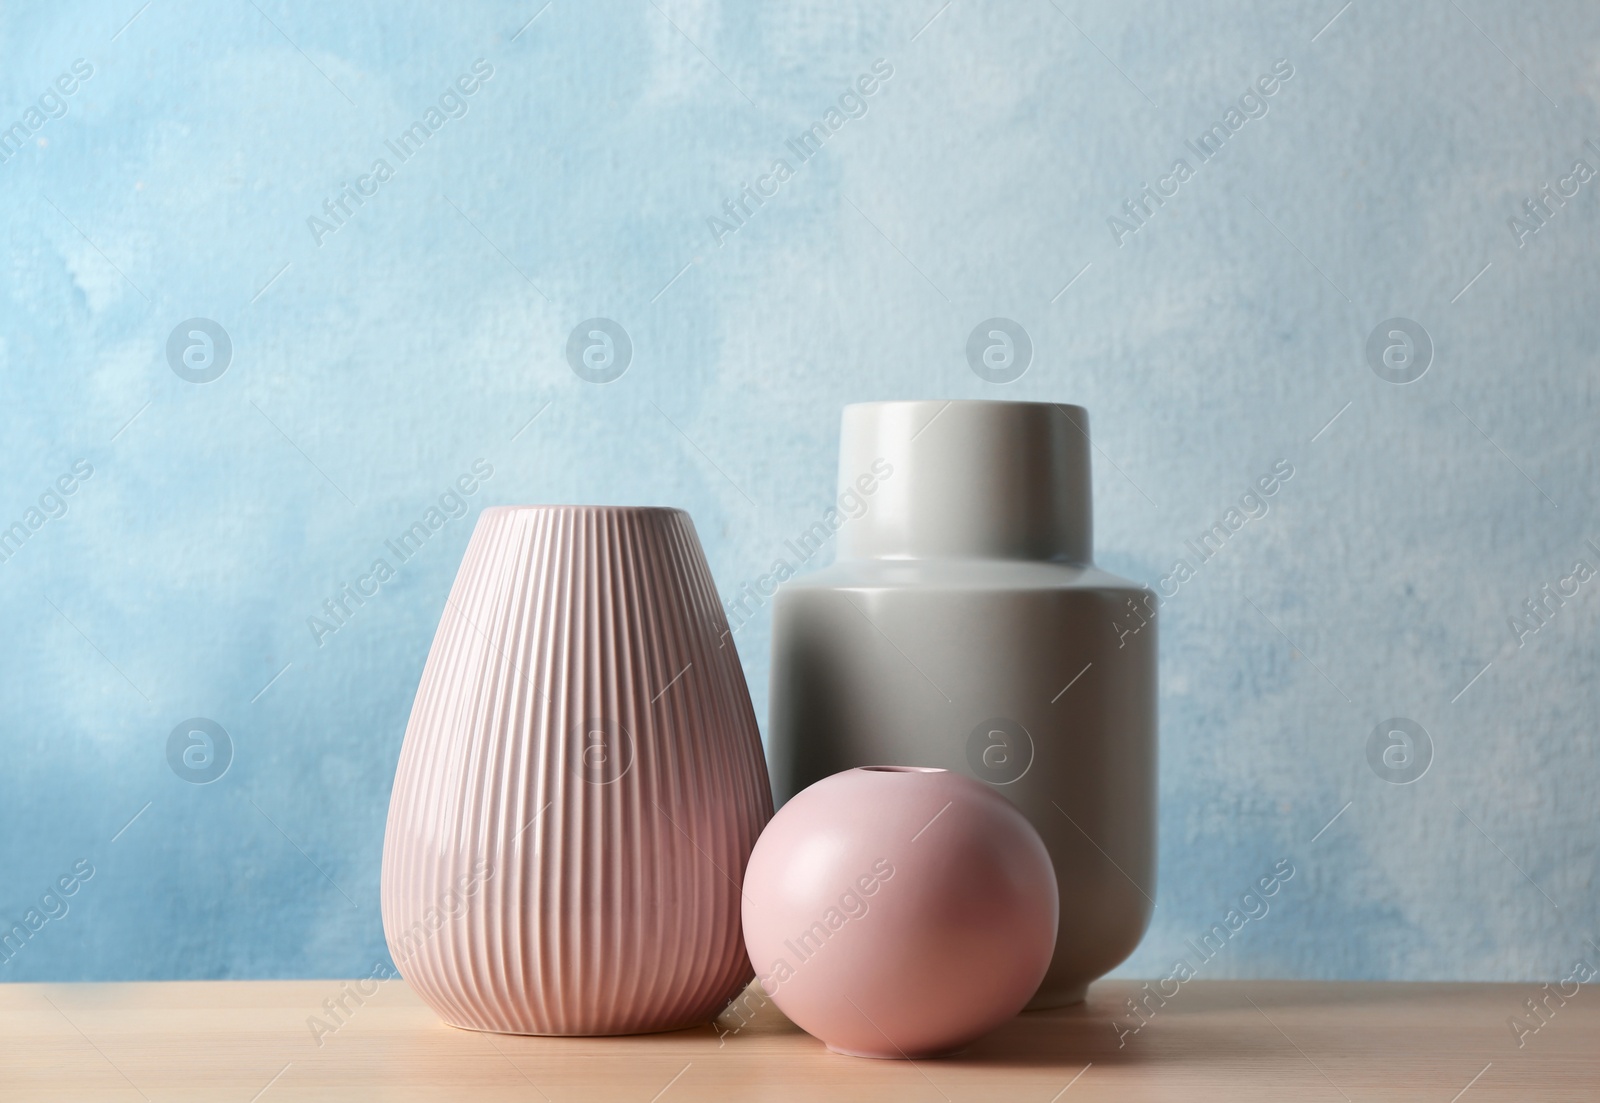 Photo of Stylish ceramic vases on wooden table against light blue background